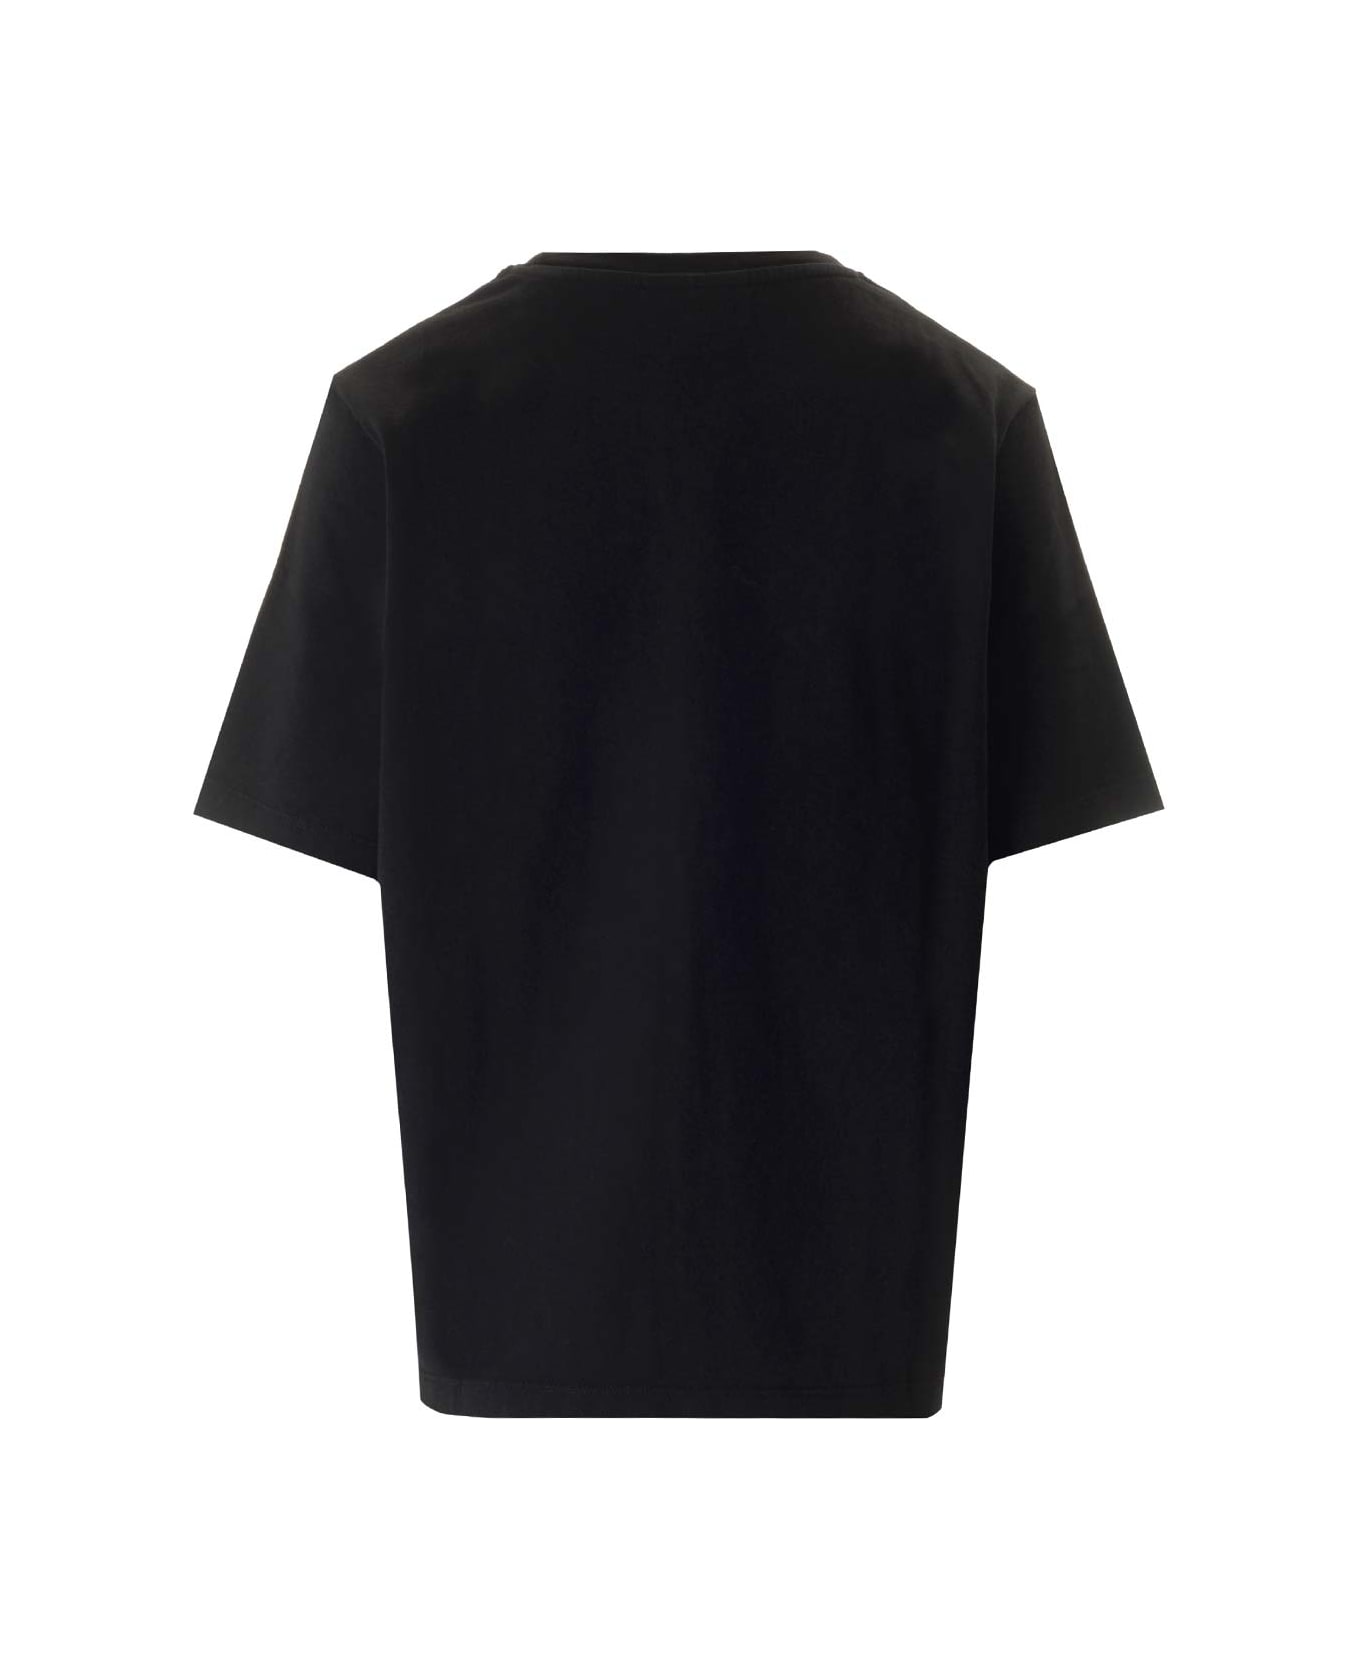 Maison Kitsuné Black T-shirt With Speedy Fox Patch - Black